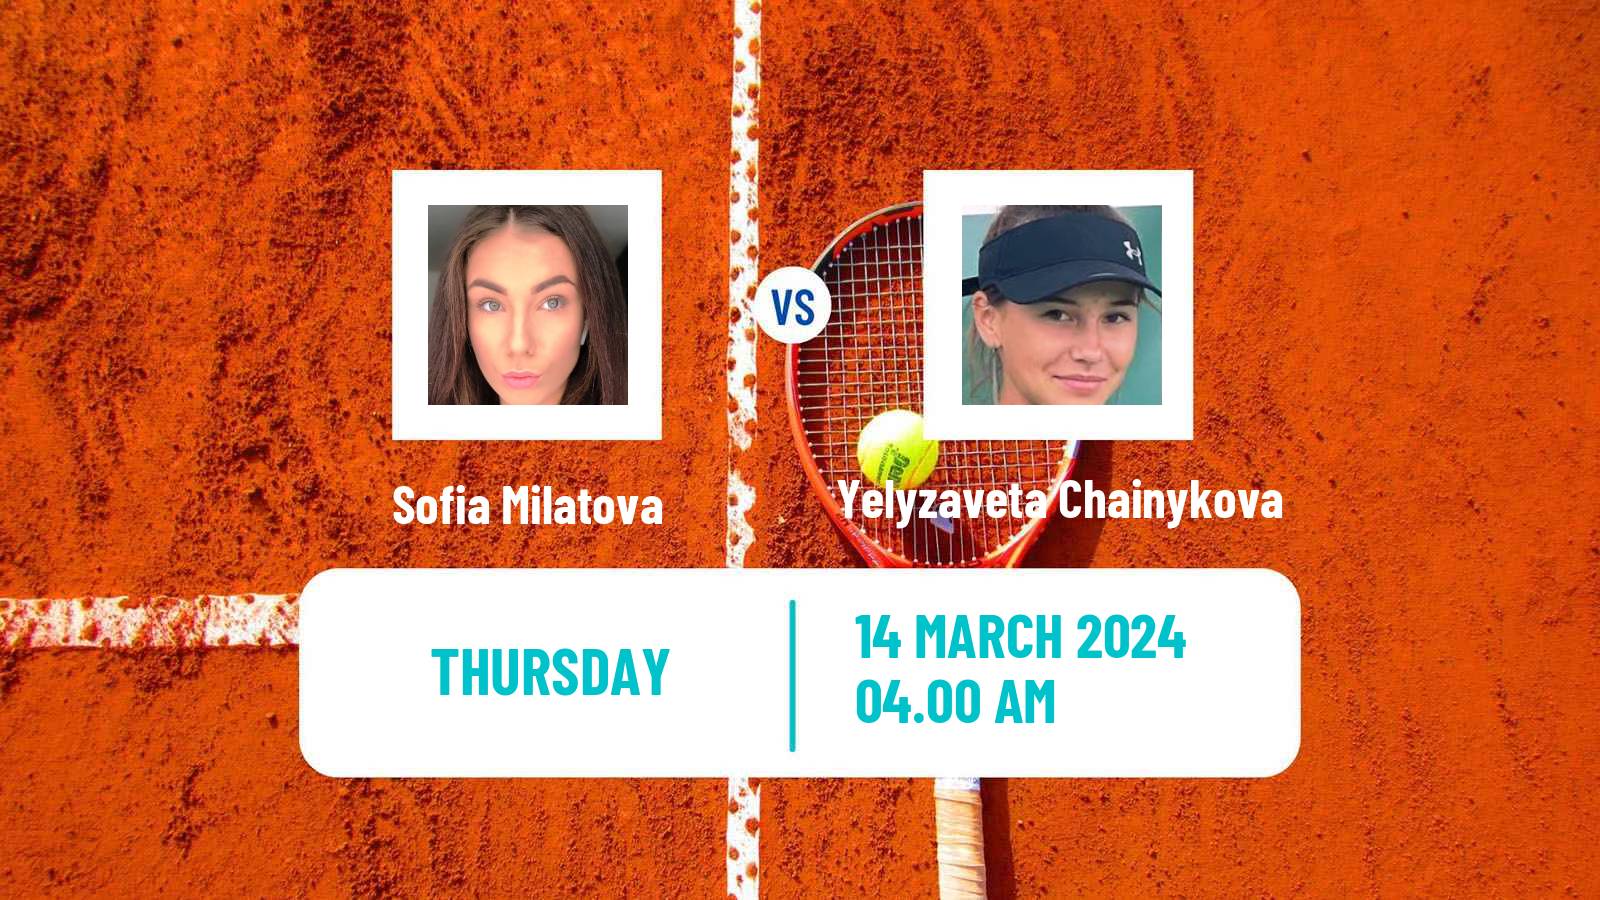 Tennis ITF W15 Heraklion 2 Women Sofia Milatova - Yelyzaveta Chainykova